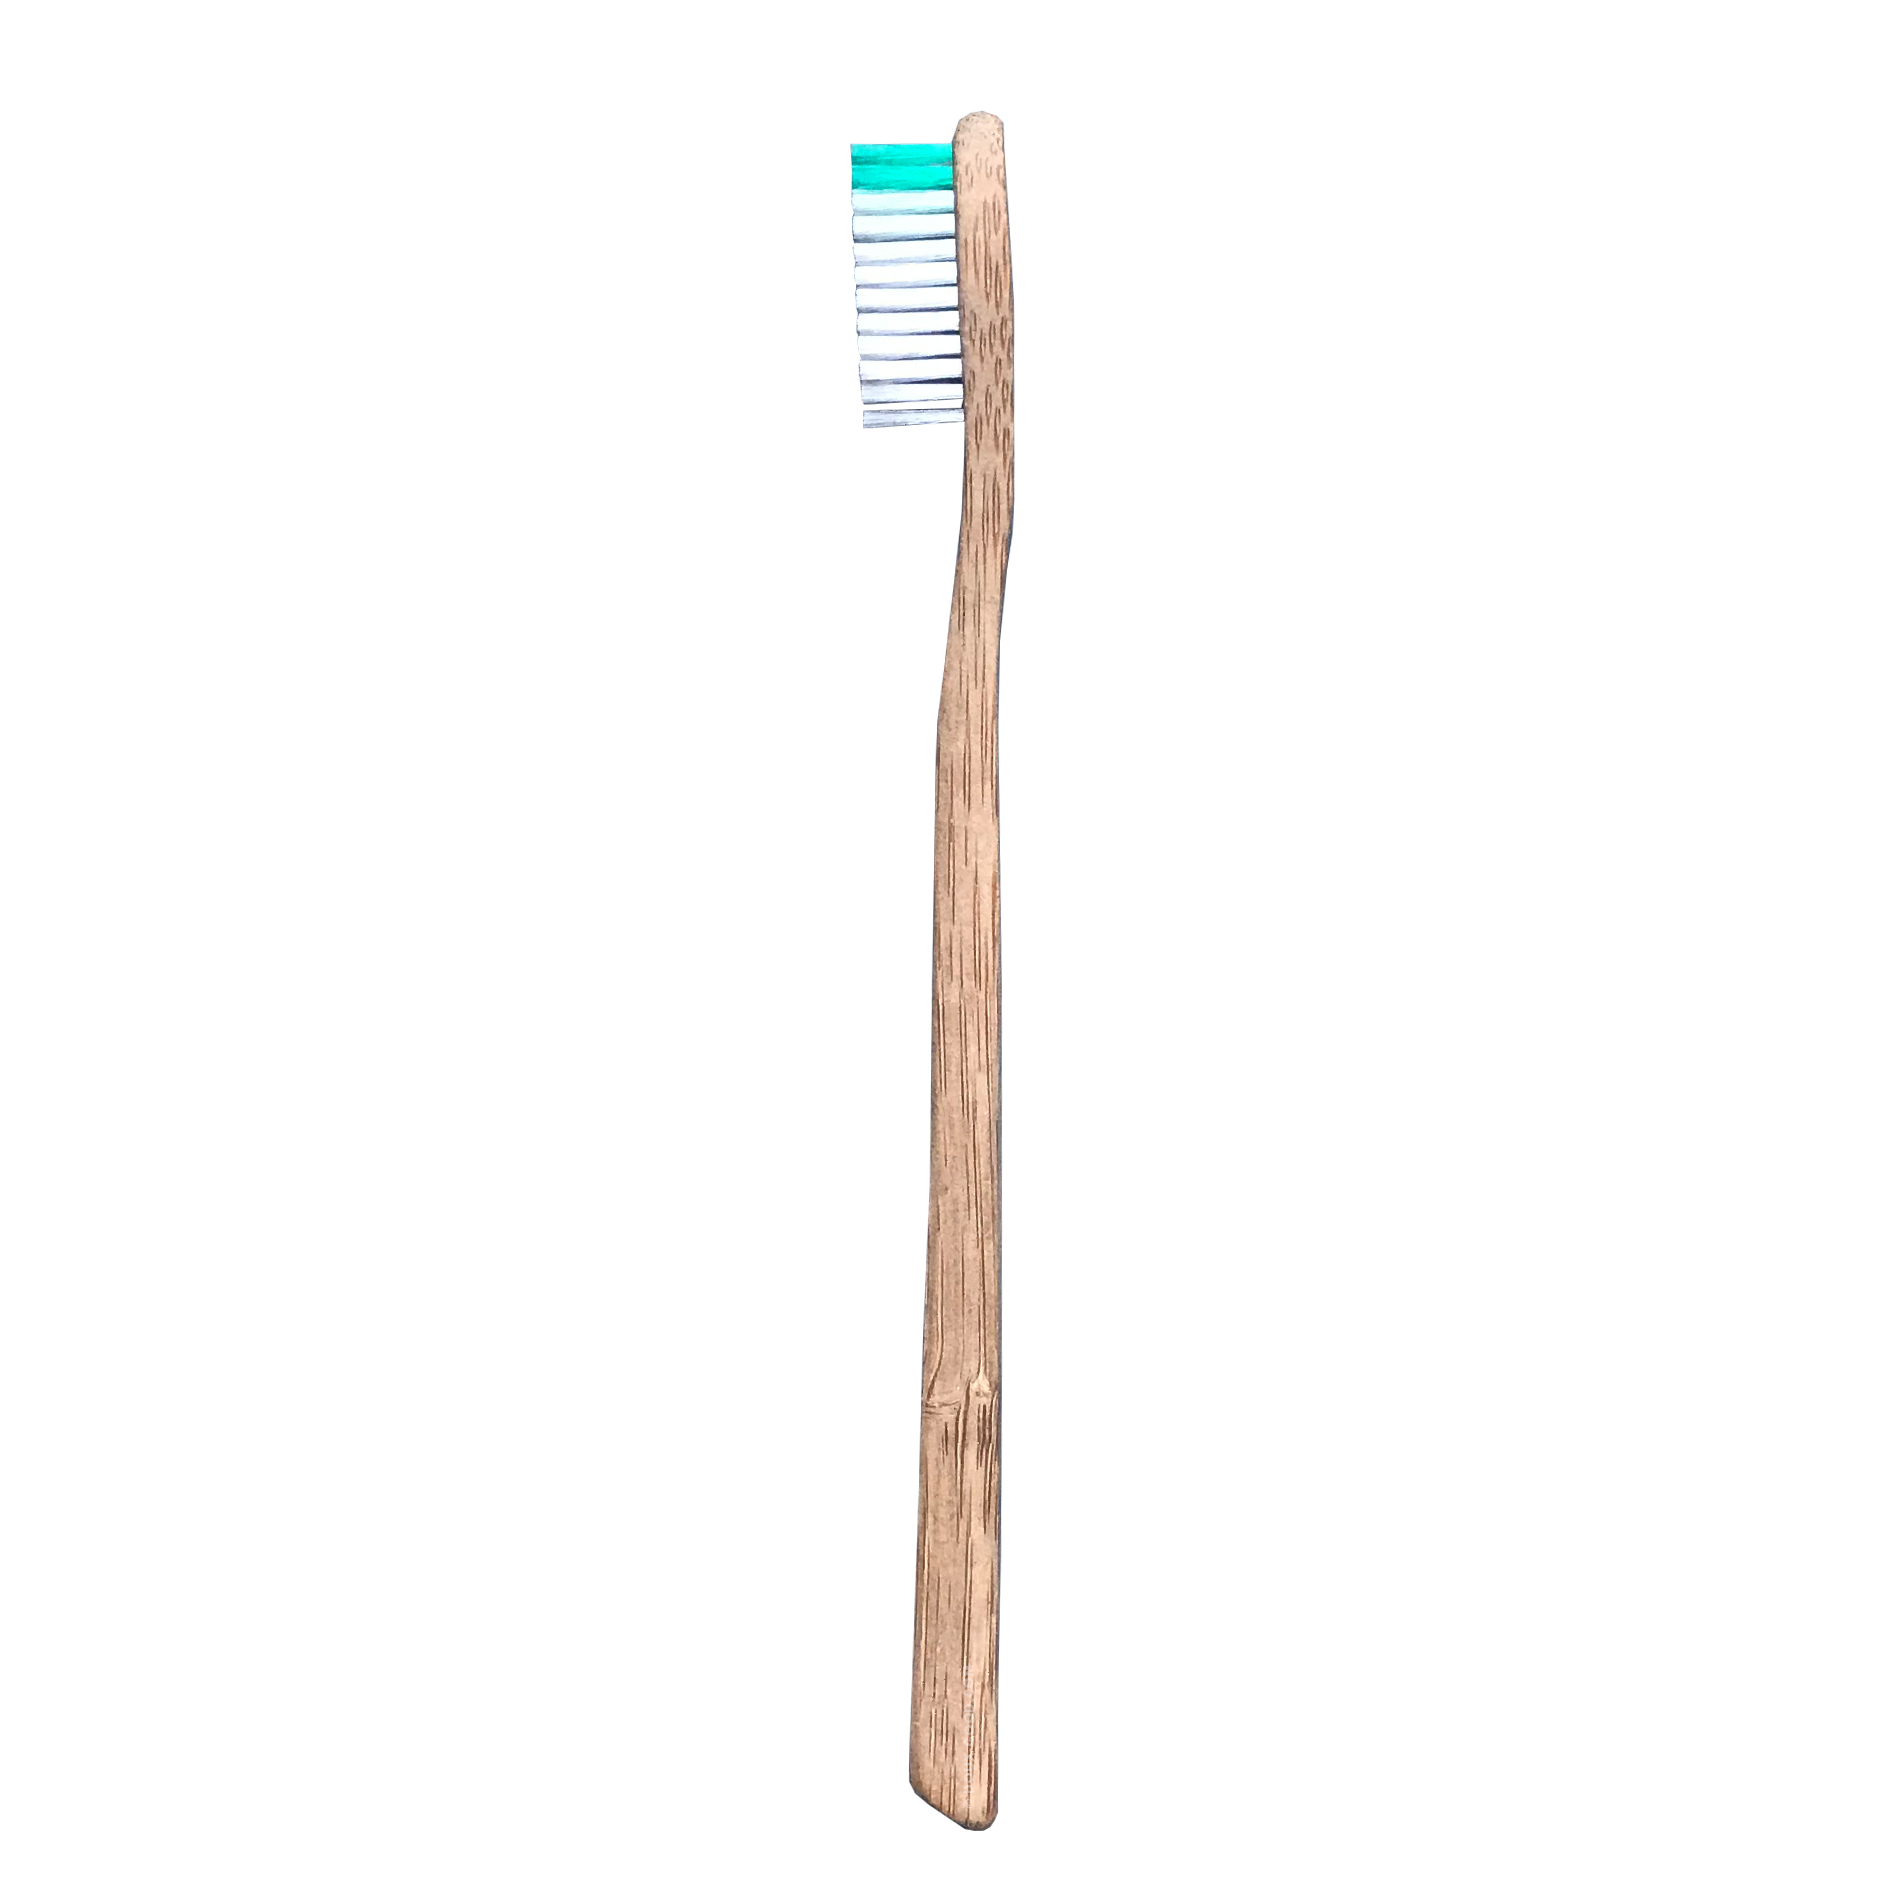 My Boo Company - brosse à dents en bambou - Adulte medium - Vert